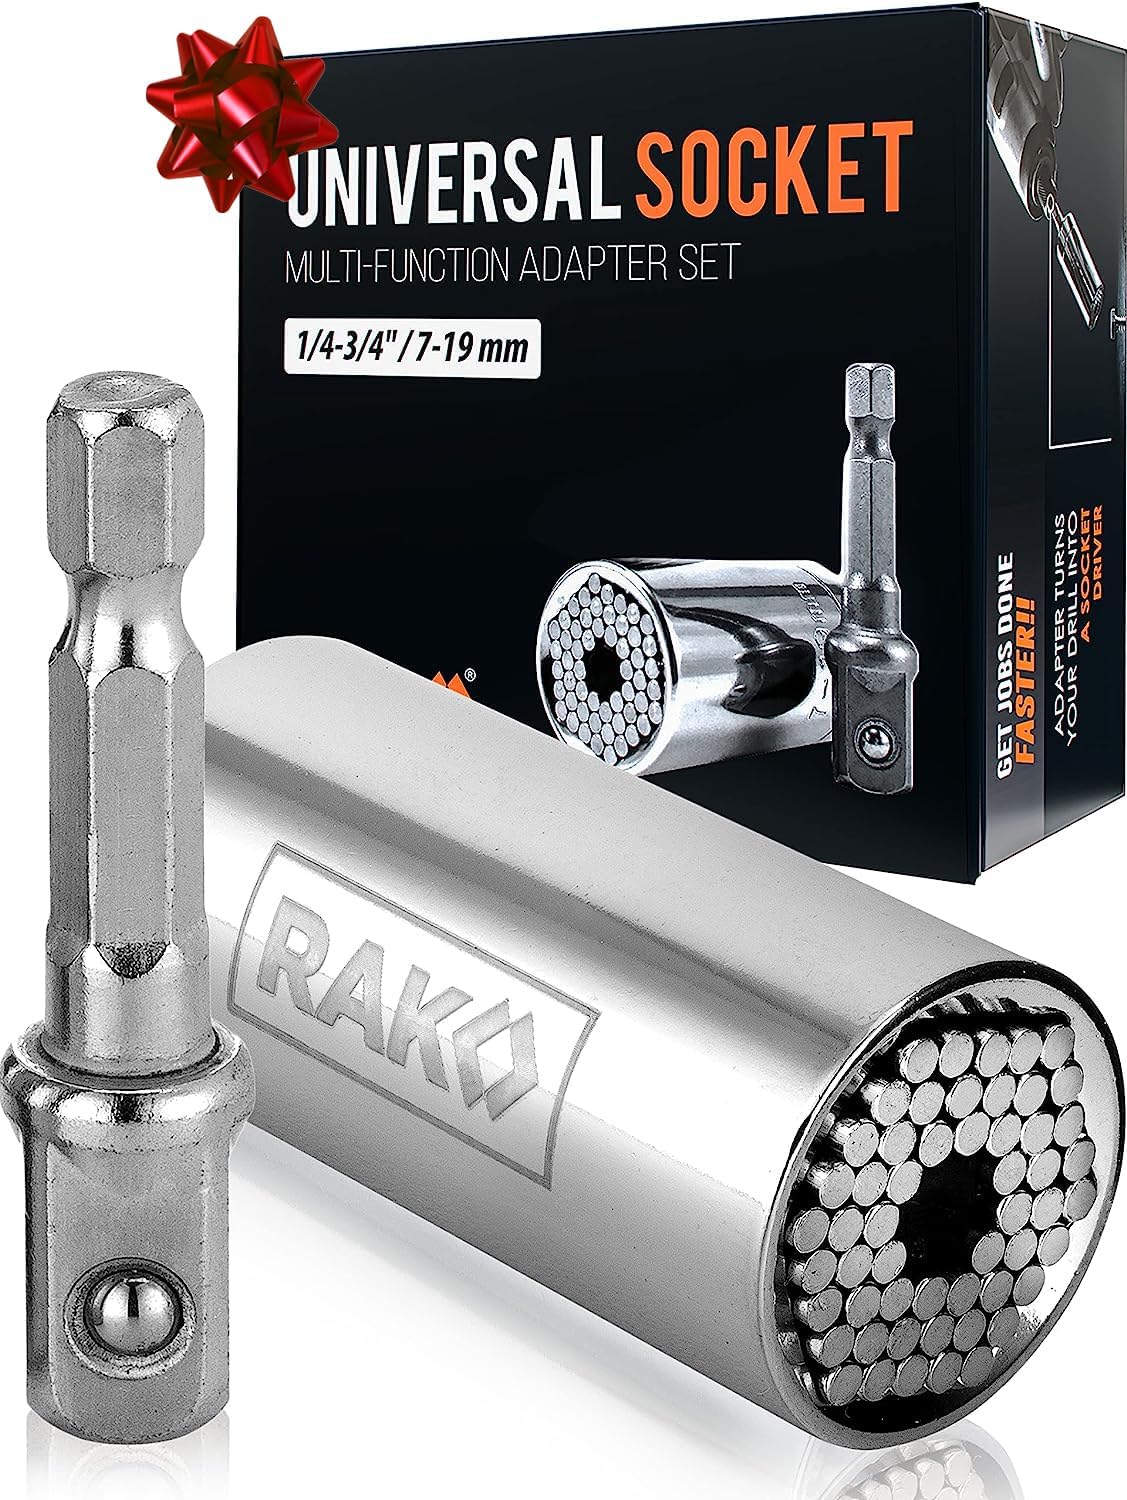 RAK Universal Socket Tool Stocking Stuffer Review